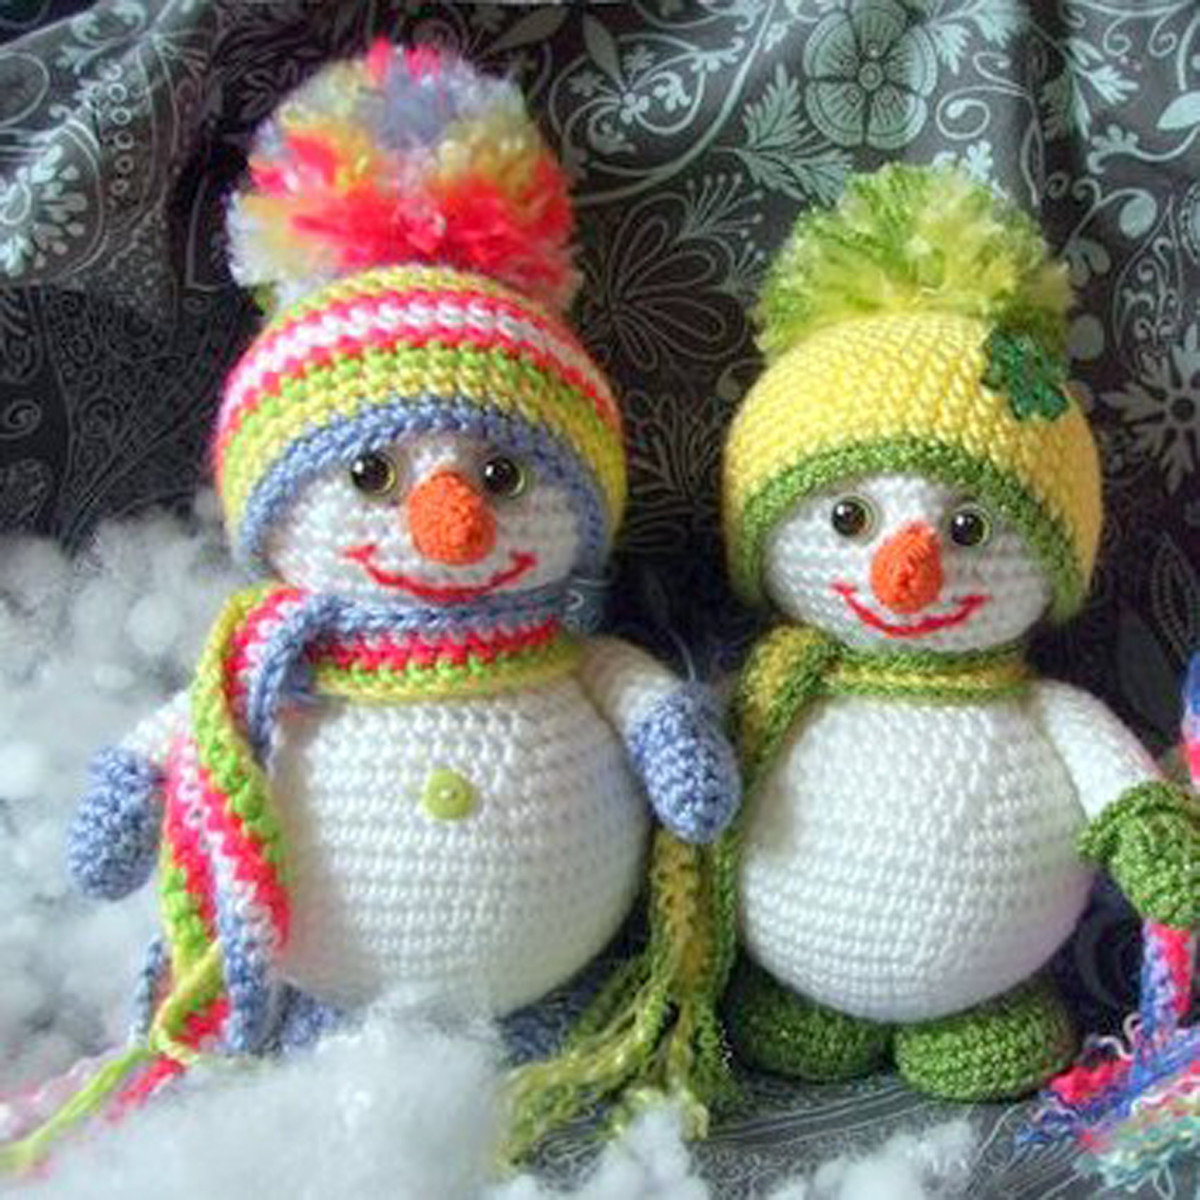 Free crochet pattern for Christmas amigurumi snowman.